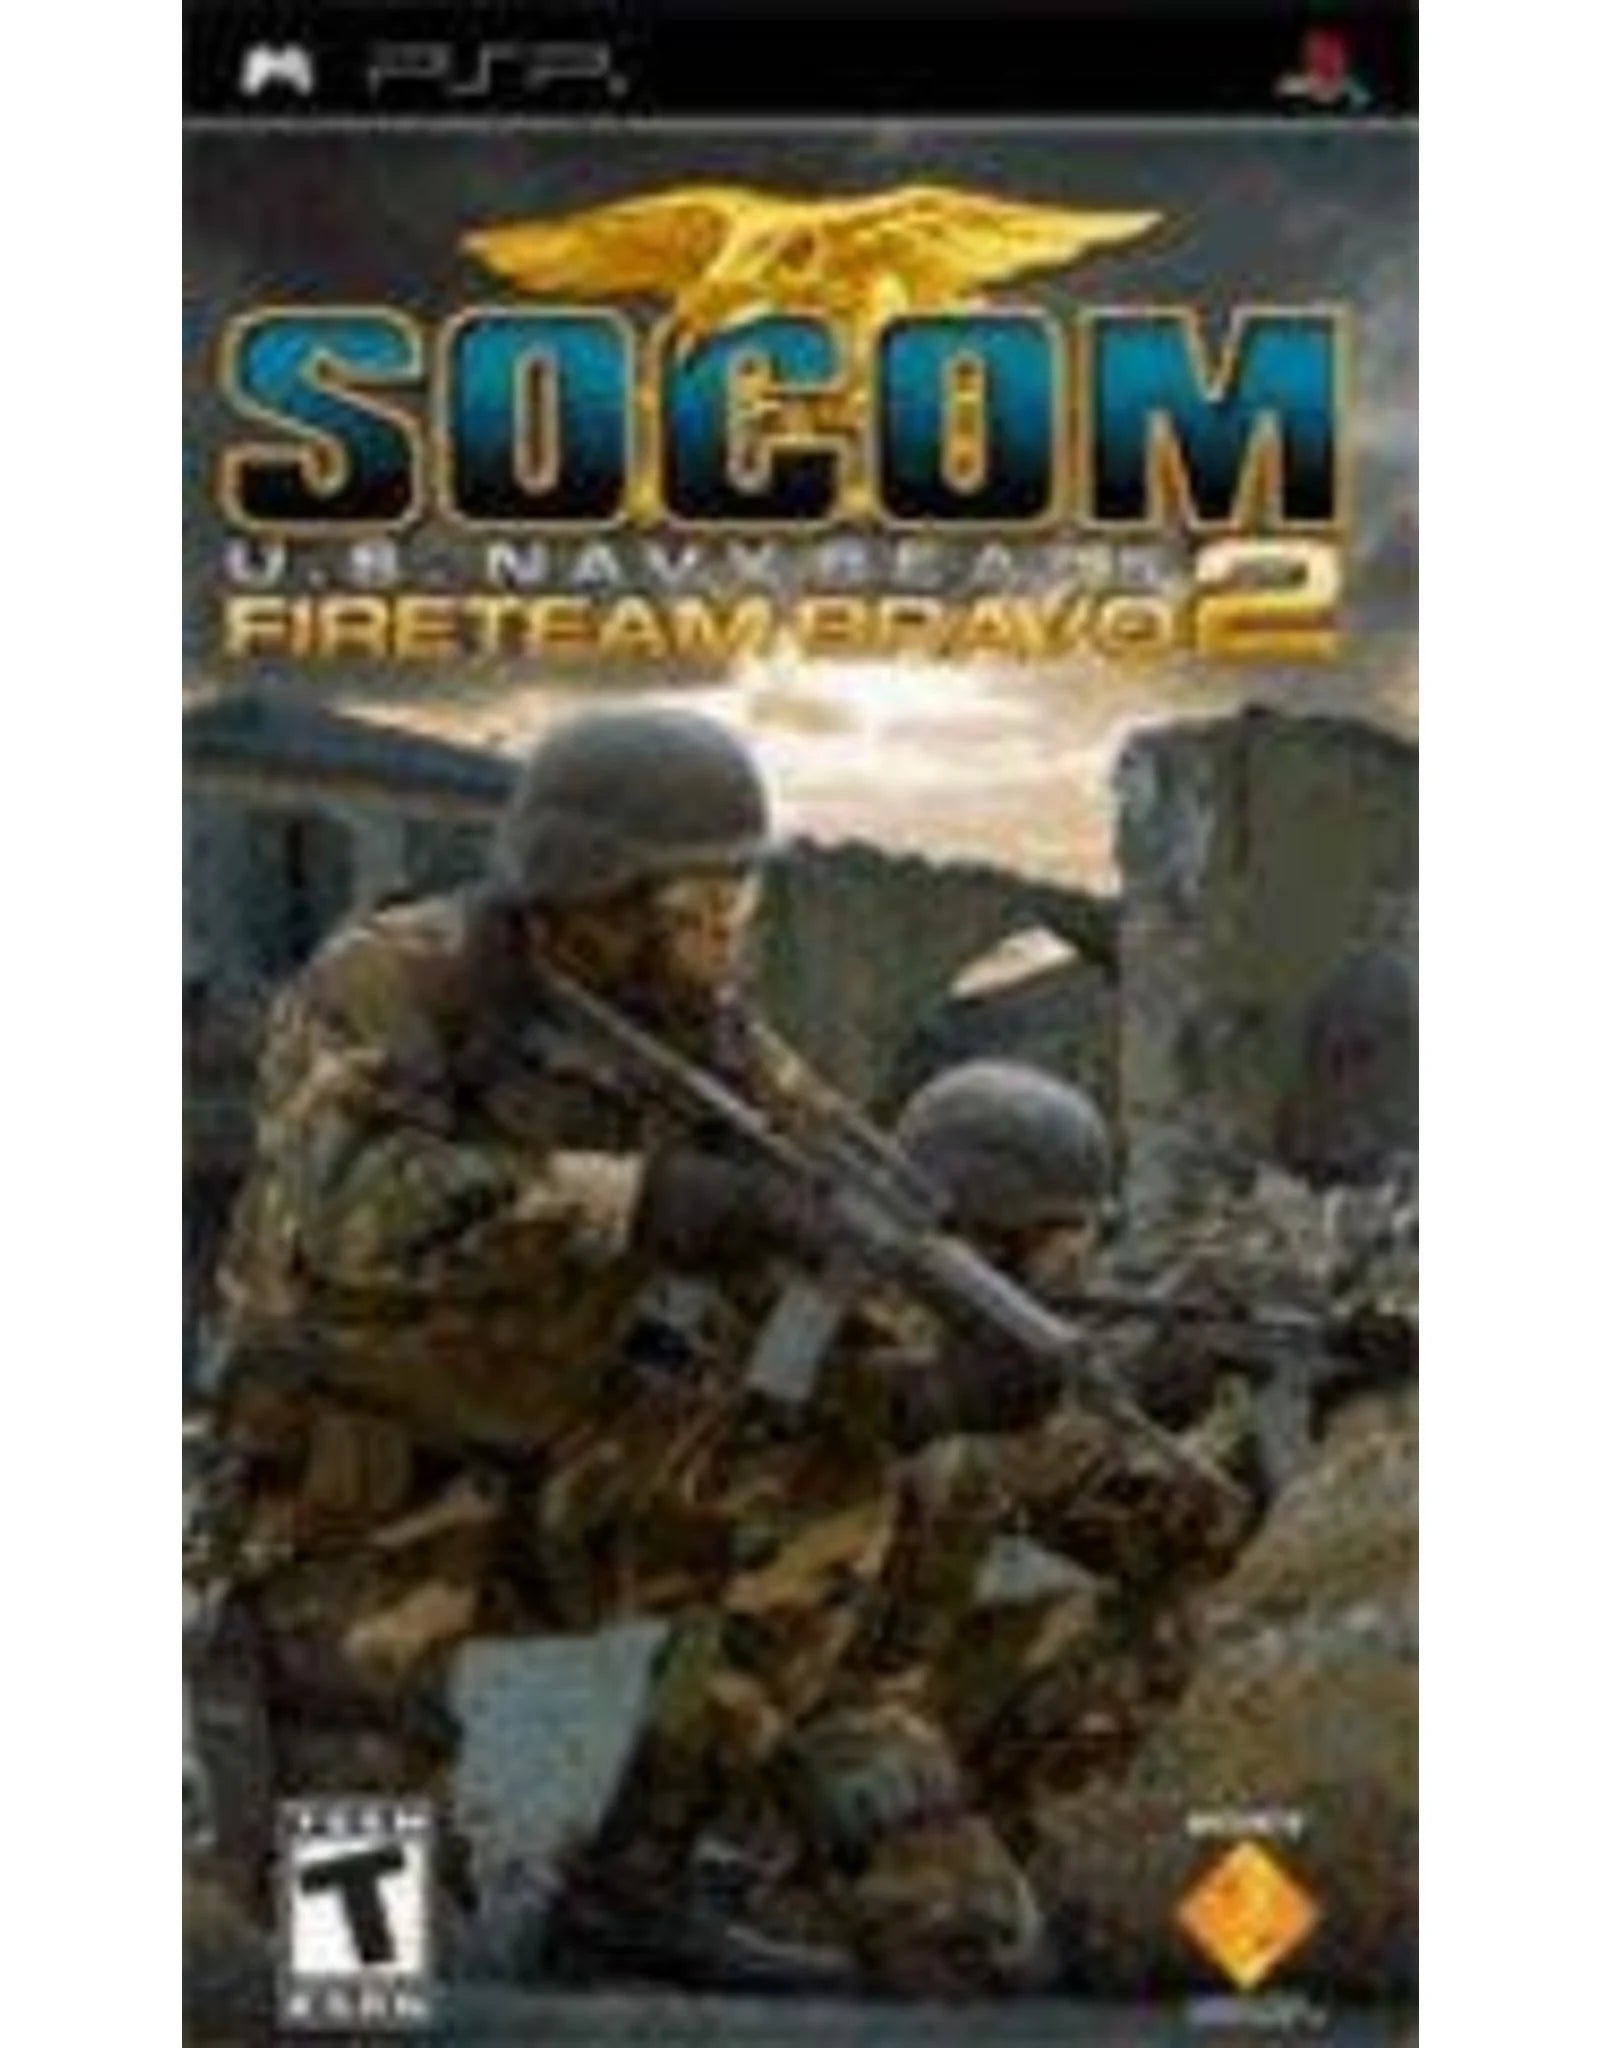 NEW Sealed Socom US Navy Seals Fireteam Bravo Video Game Sony PSP Fire Team